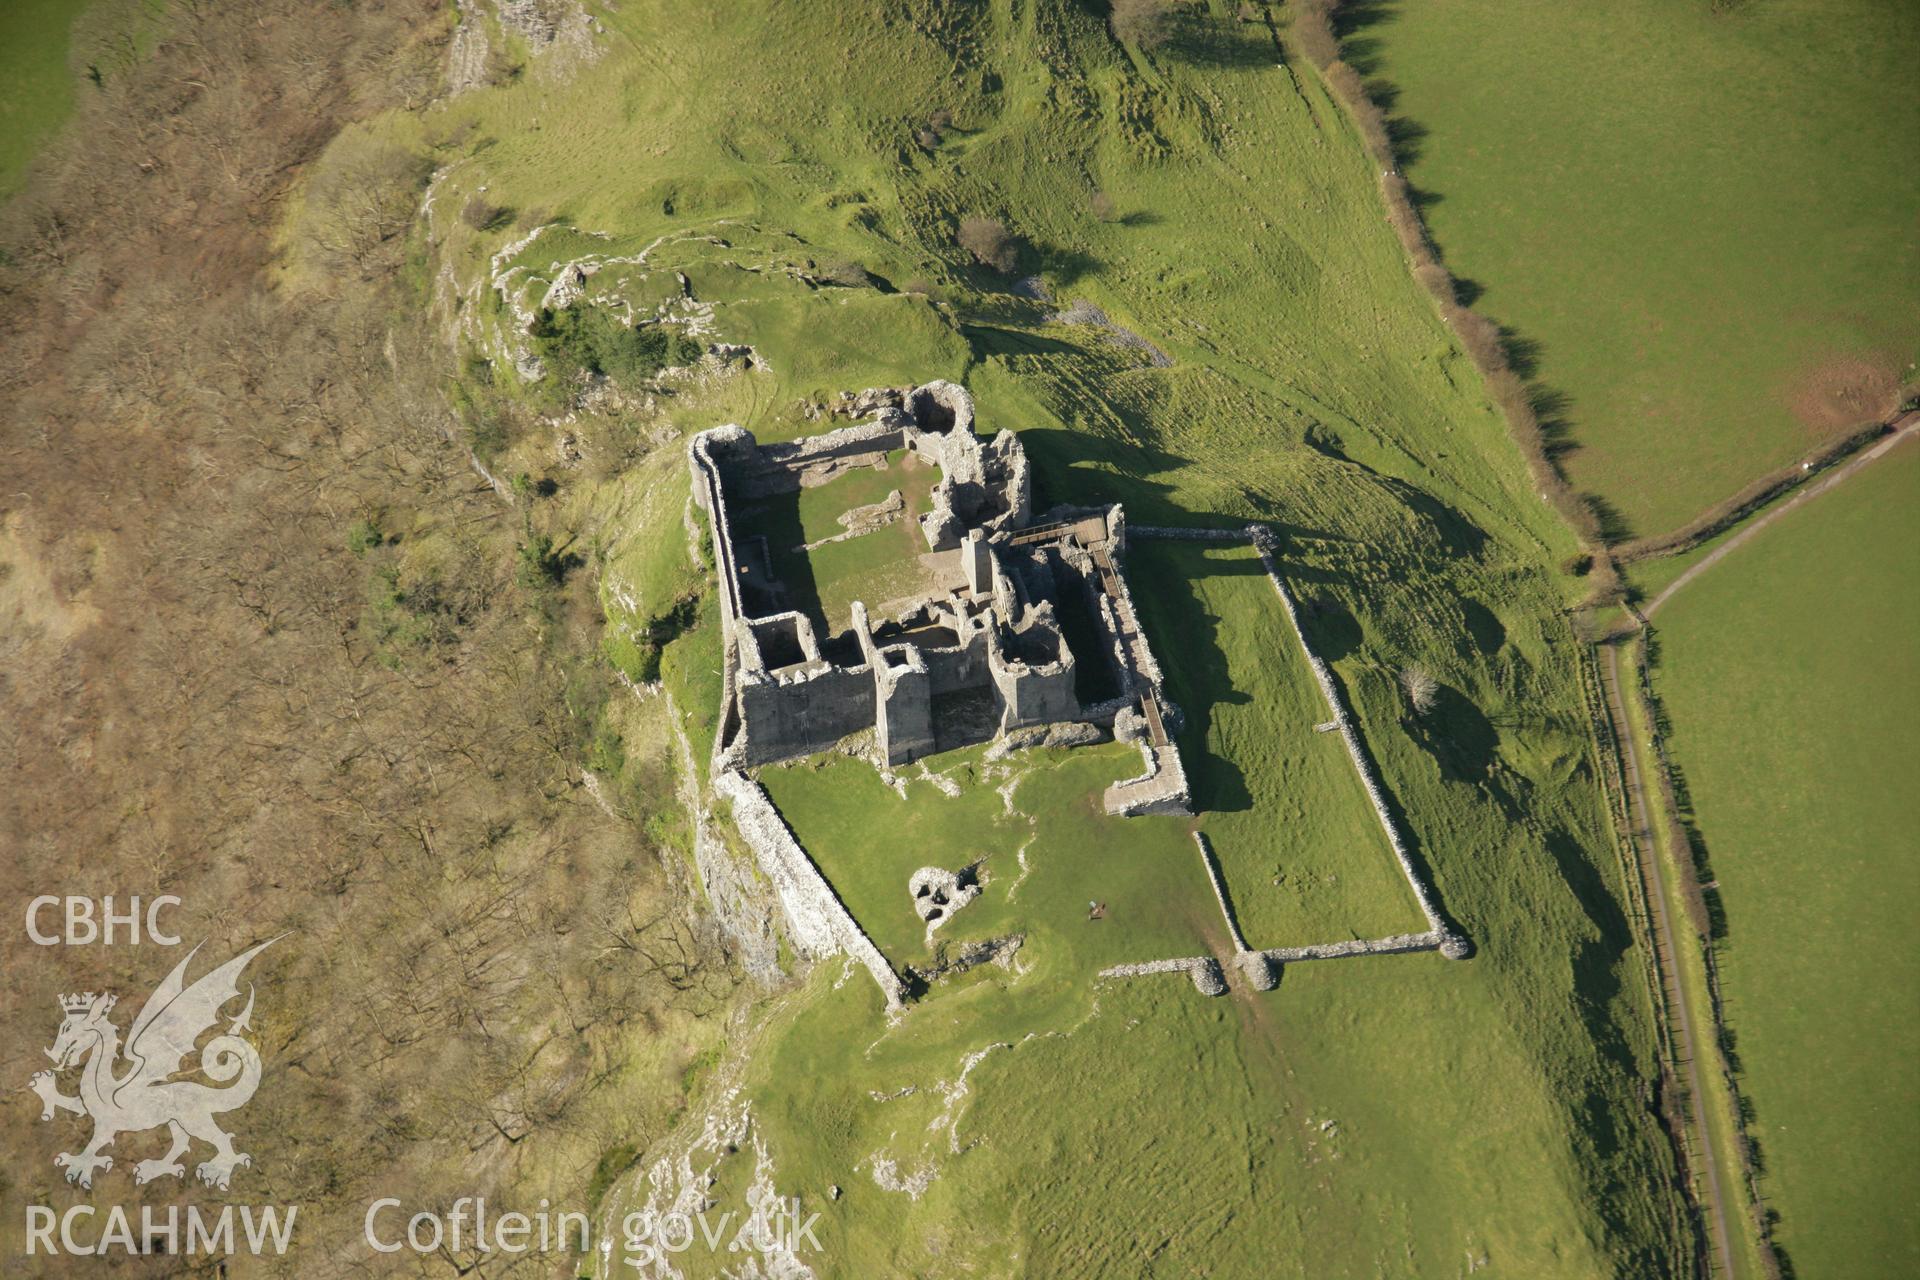 RCAHMW colour oblique aerial photograph of Carreg Cennen Castle. Taken on 21 March 2007 by Toby Driver